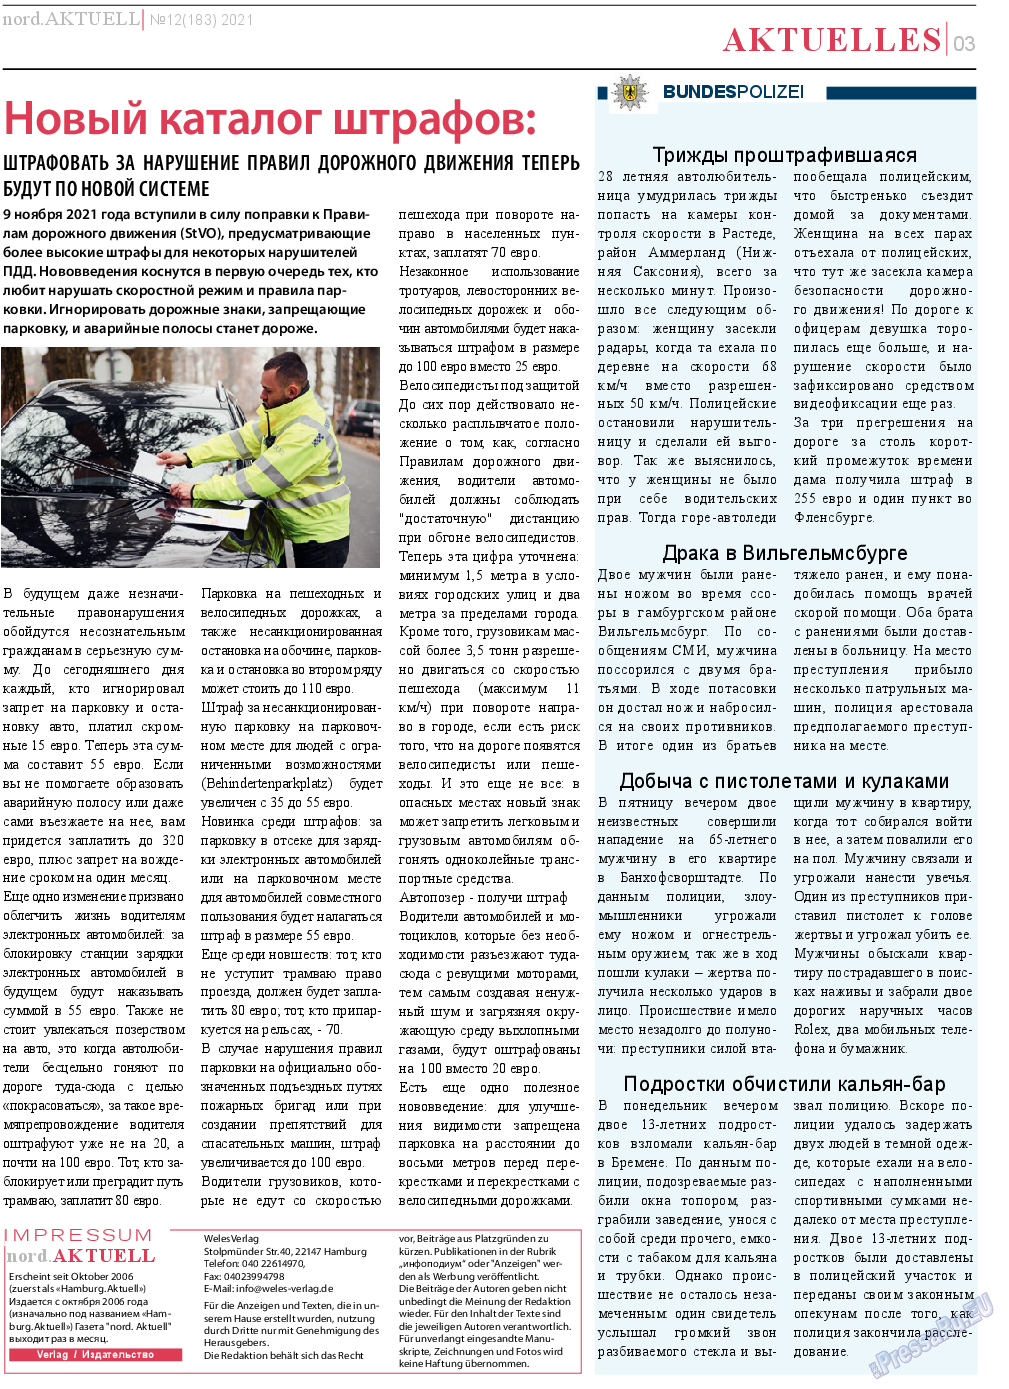 nord.Aktuell, газета. 2021 №12 стр.3